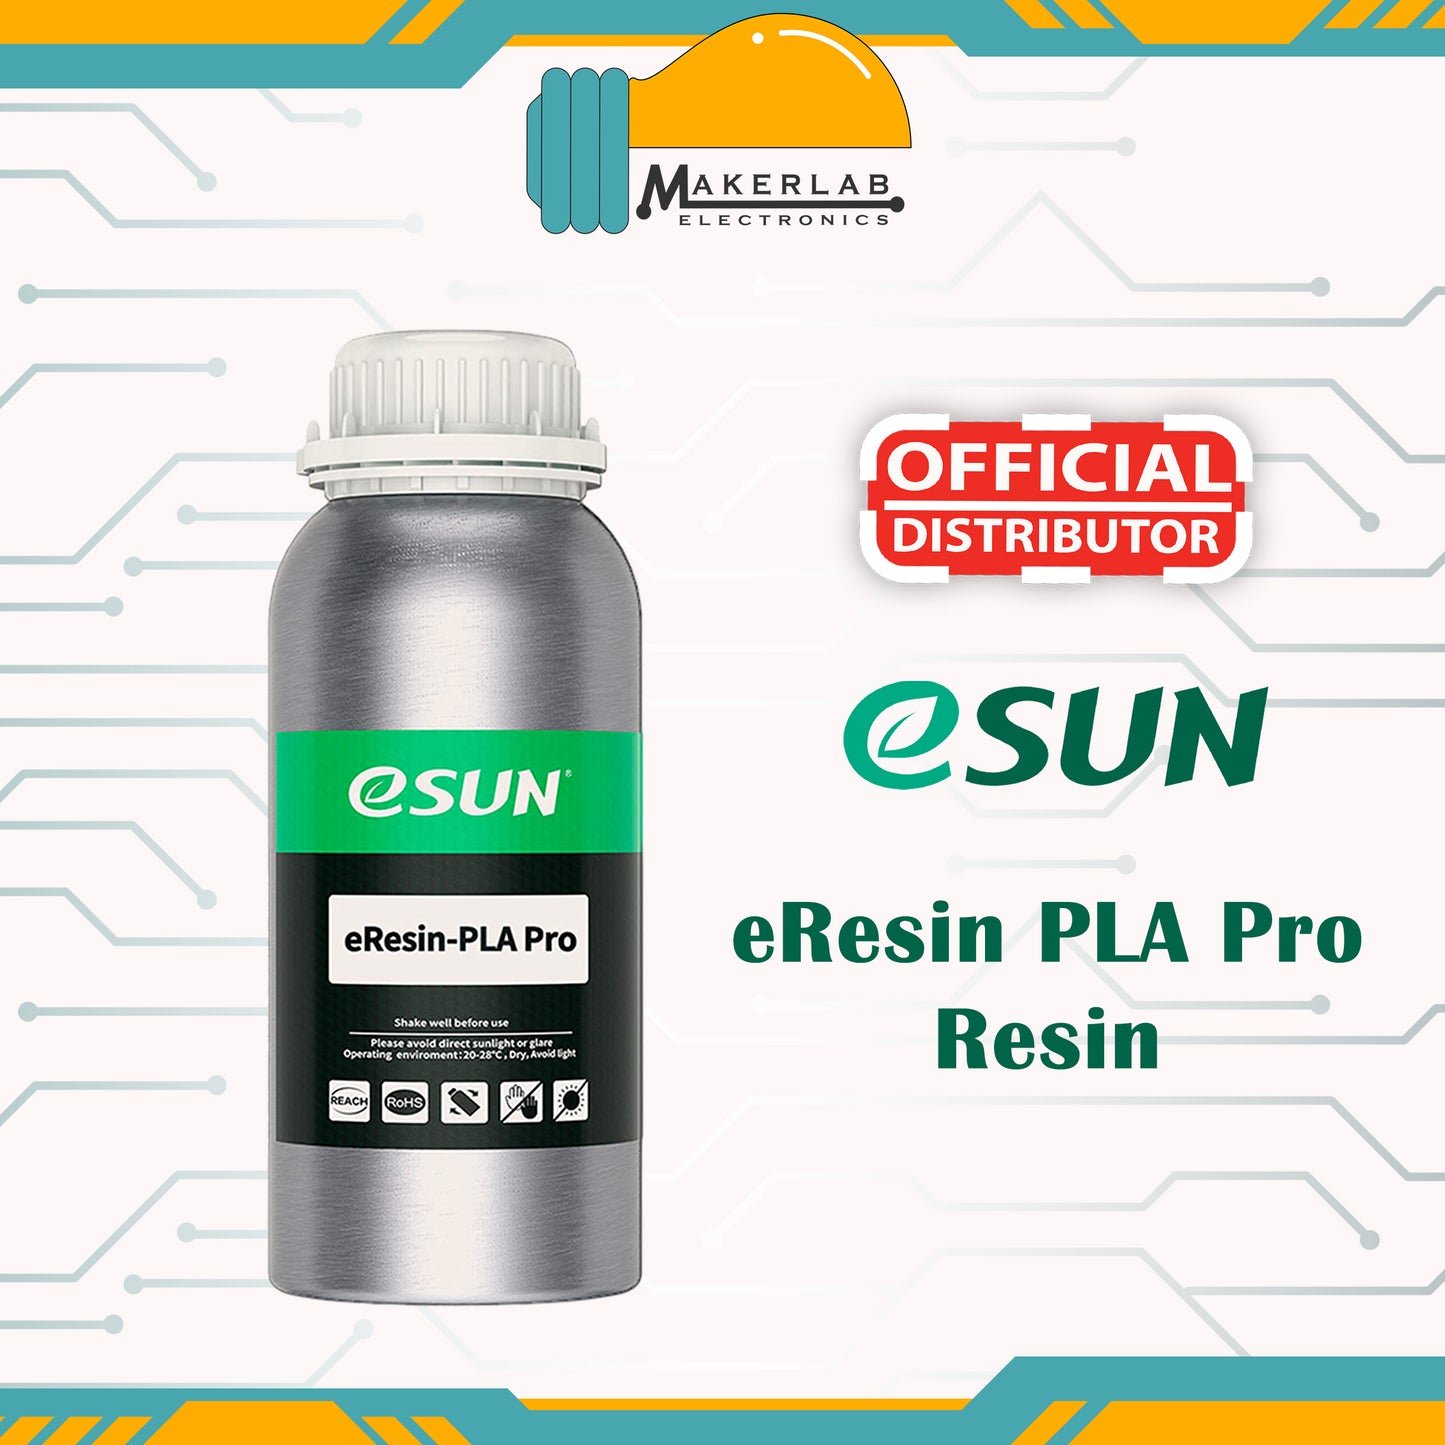 eSUN LCD UV 405nm eResin-PLA Pro LCD Resin for Photon UV Curing LCD 3D Printer Photopolymer Liquid 3D Resin